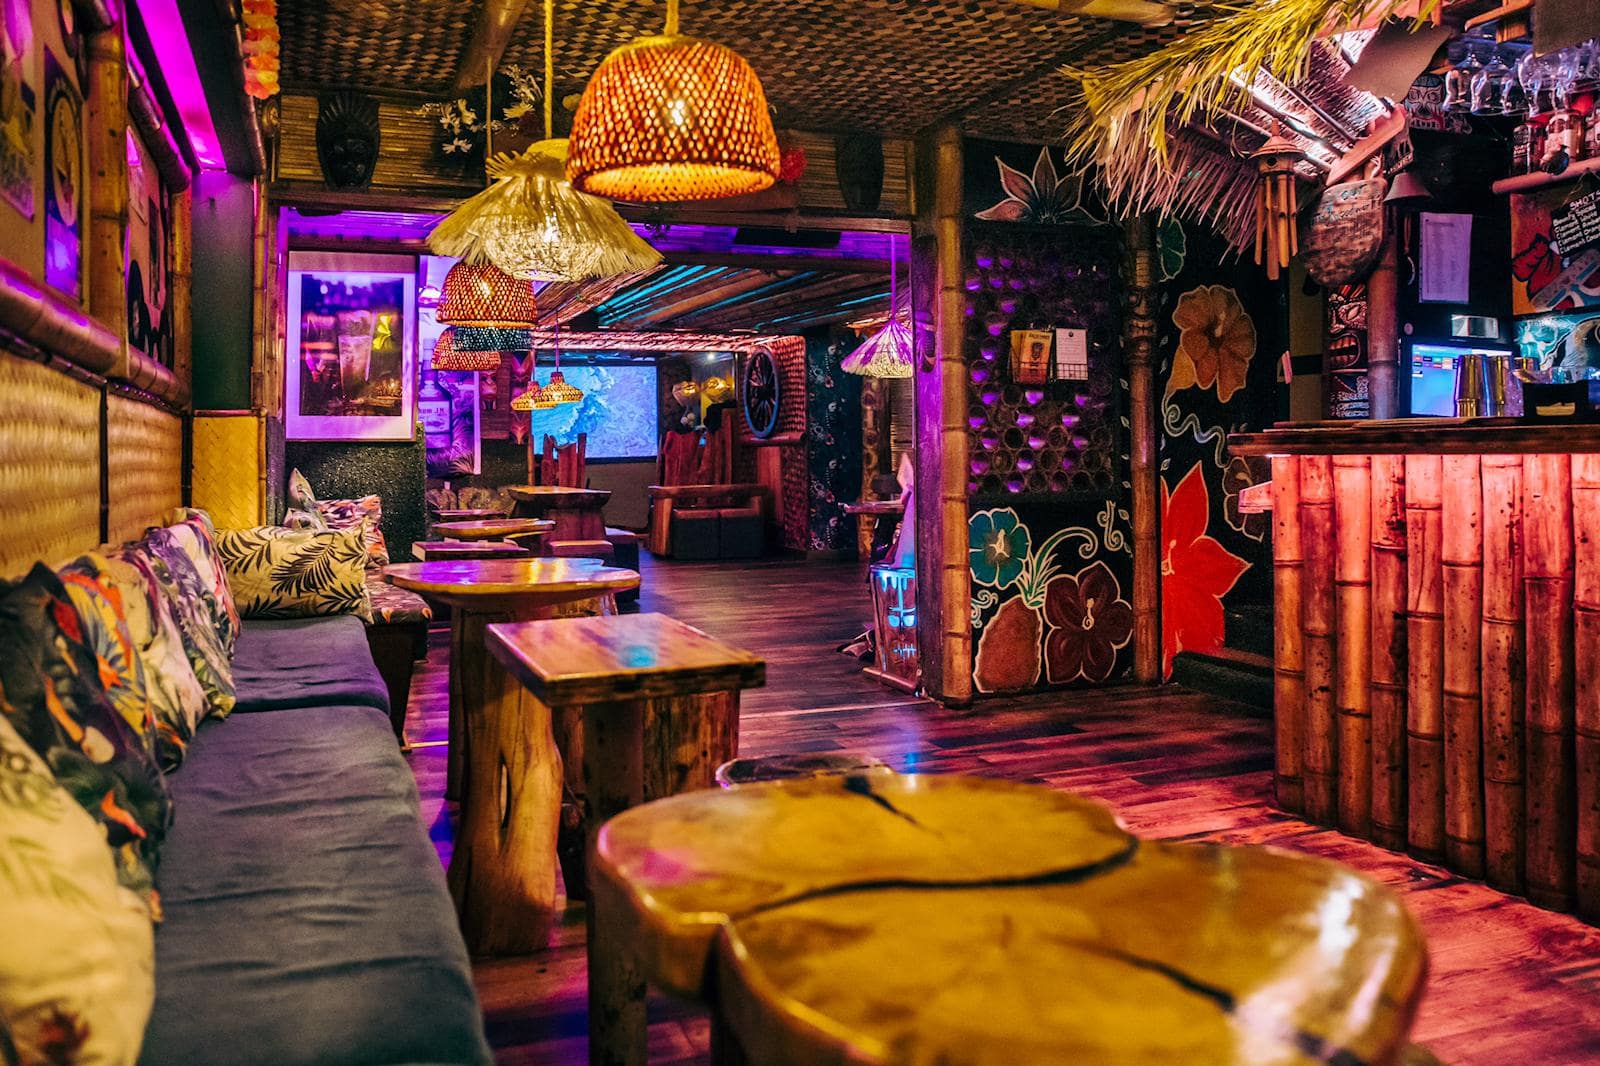 The Beachcomber – Tiki bars